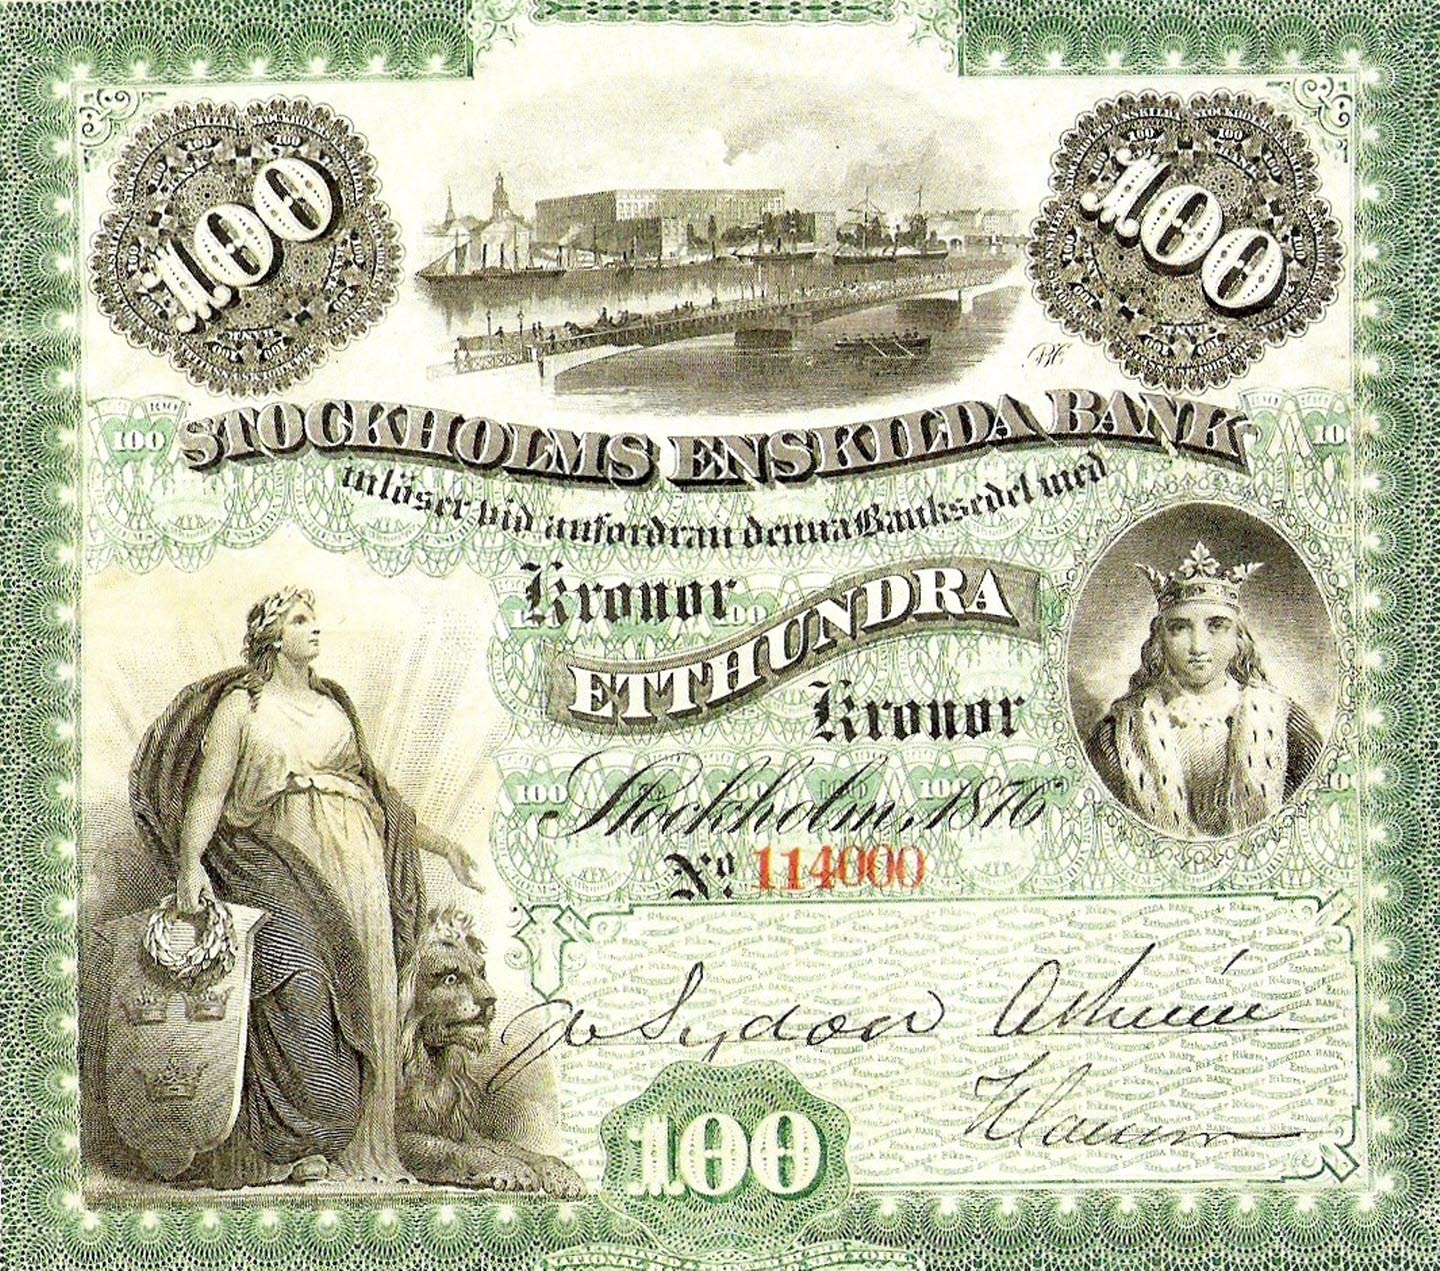 Banknote issued by Stockholms Enskilda Bank